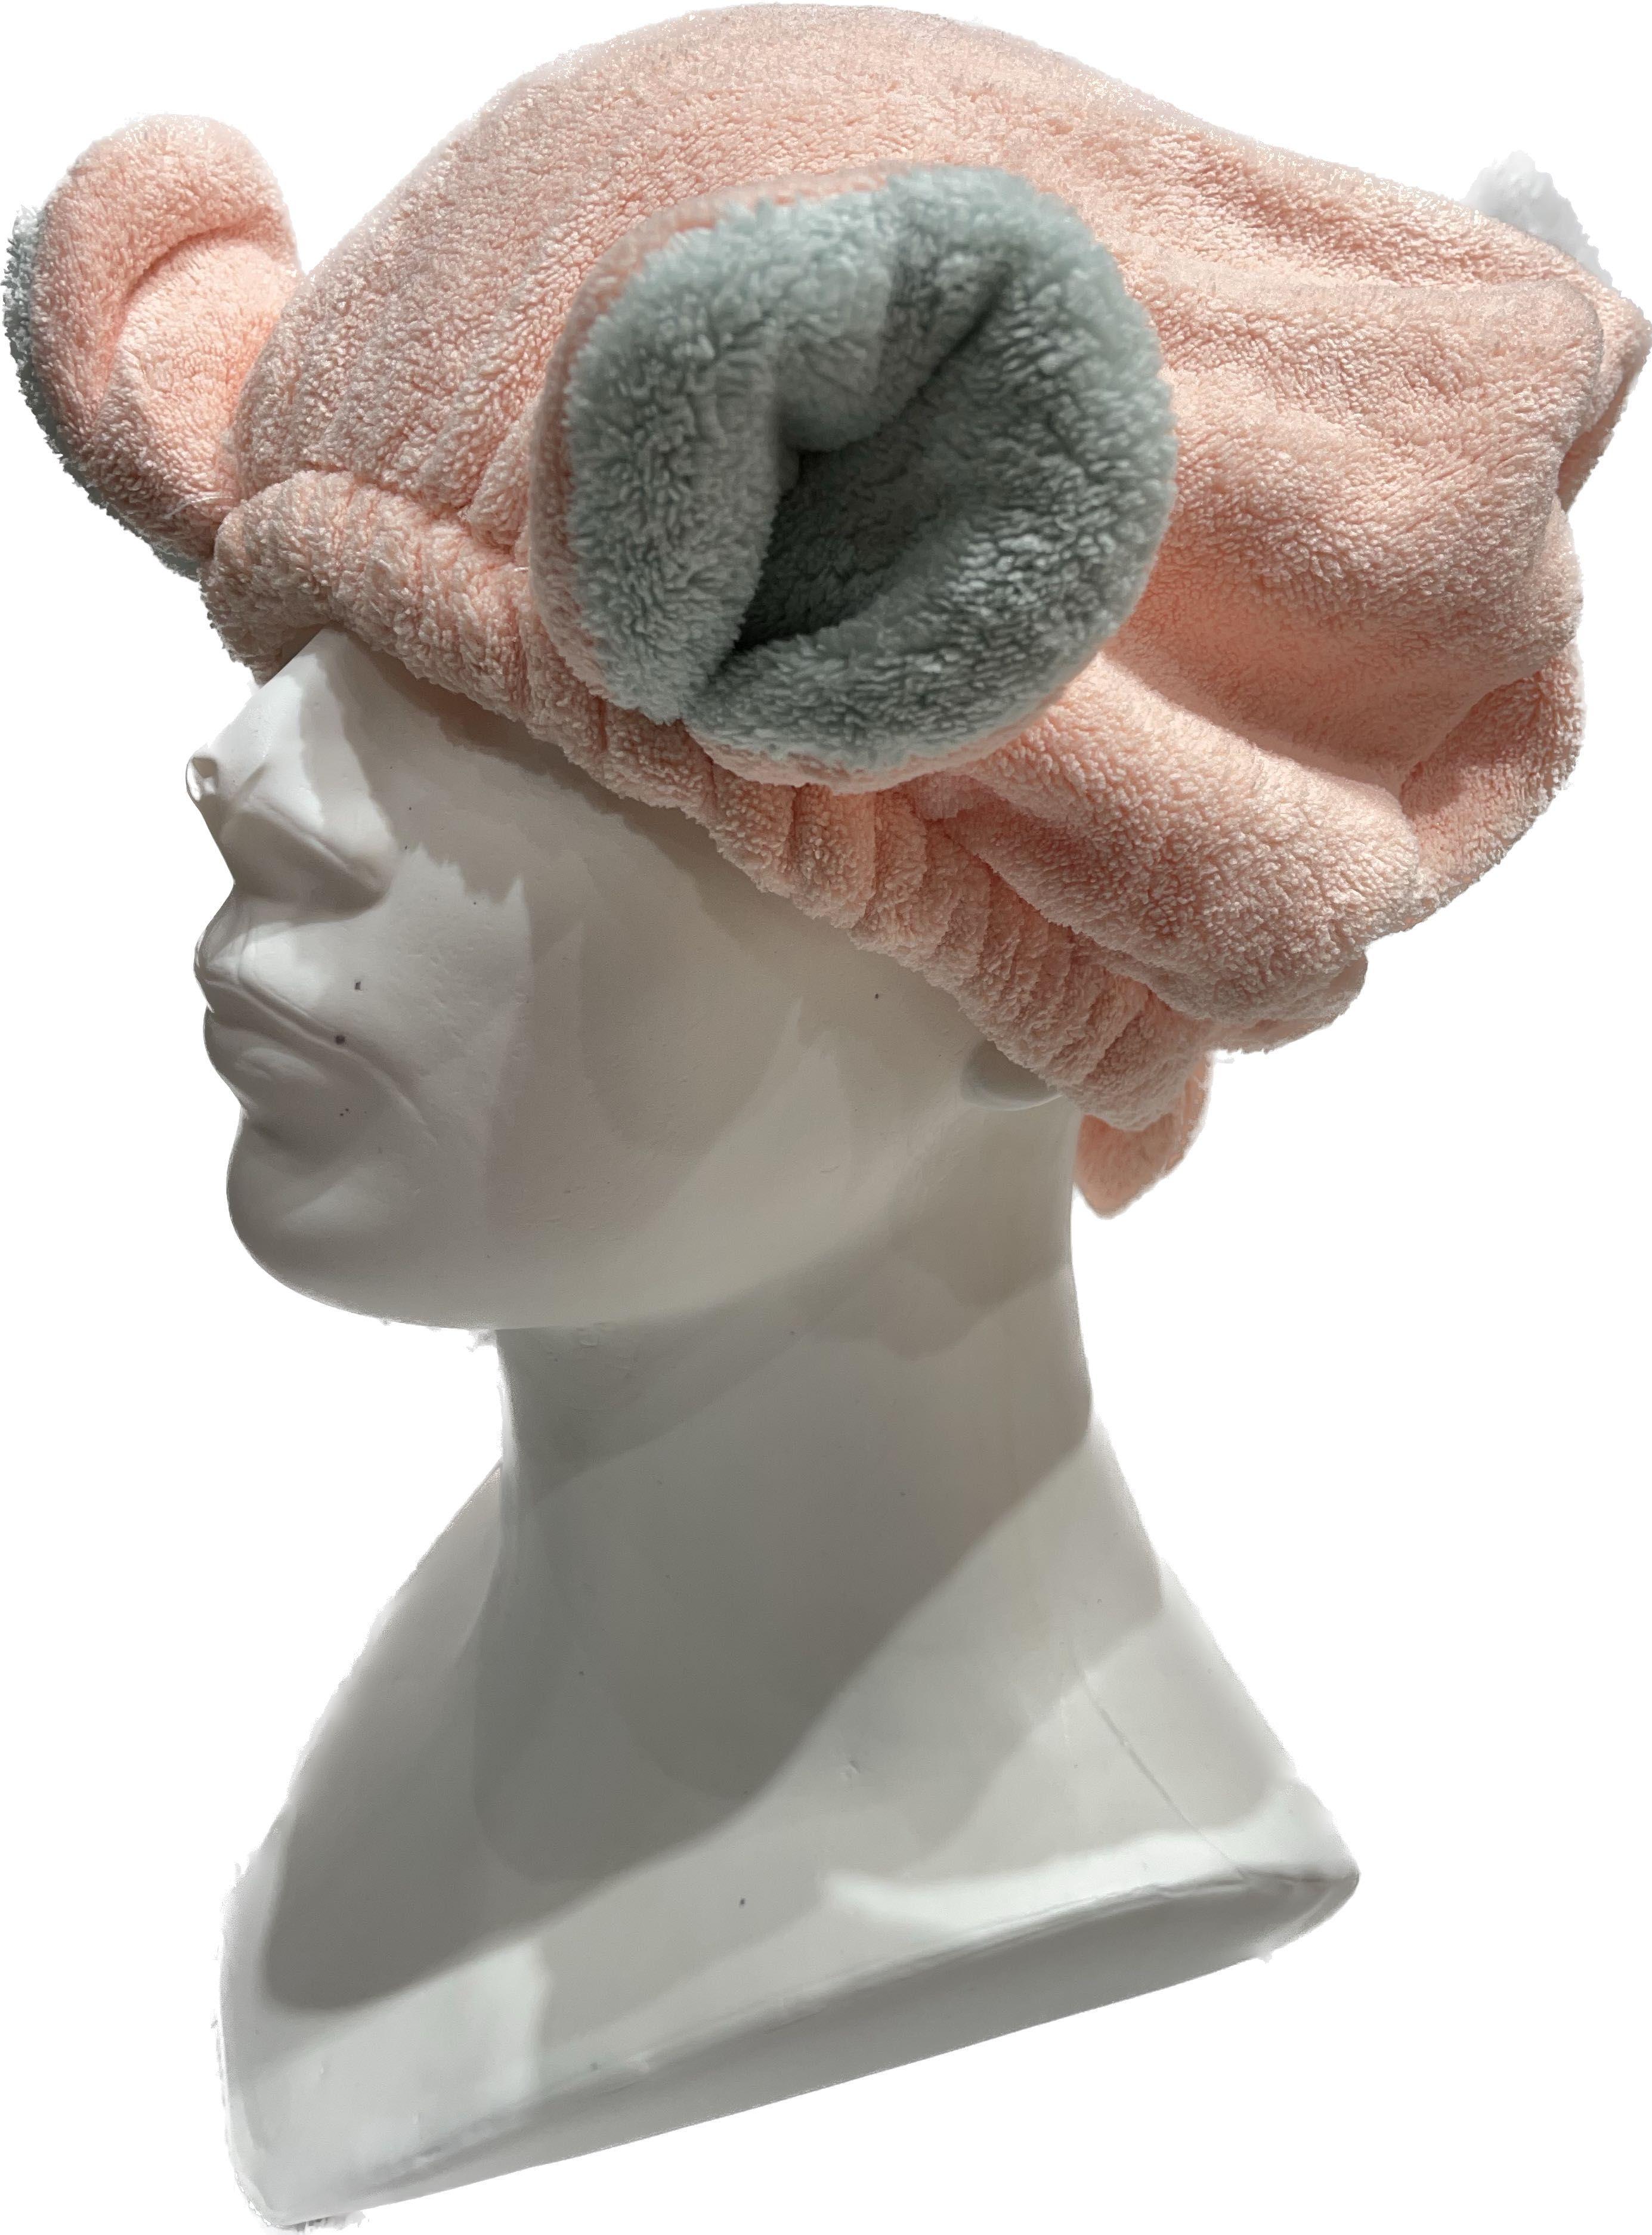 Super absorbent hair towel, hair turban - with ears